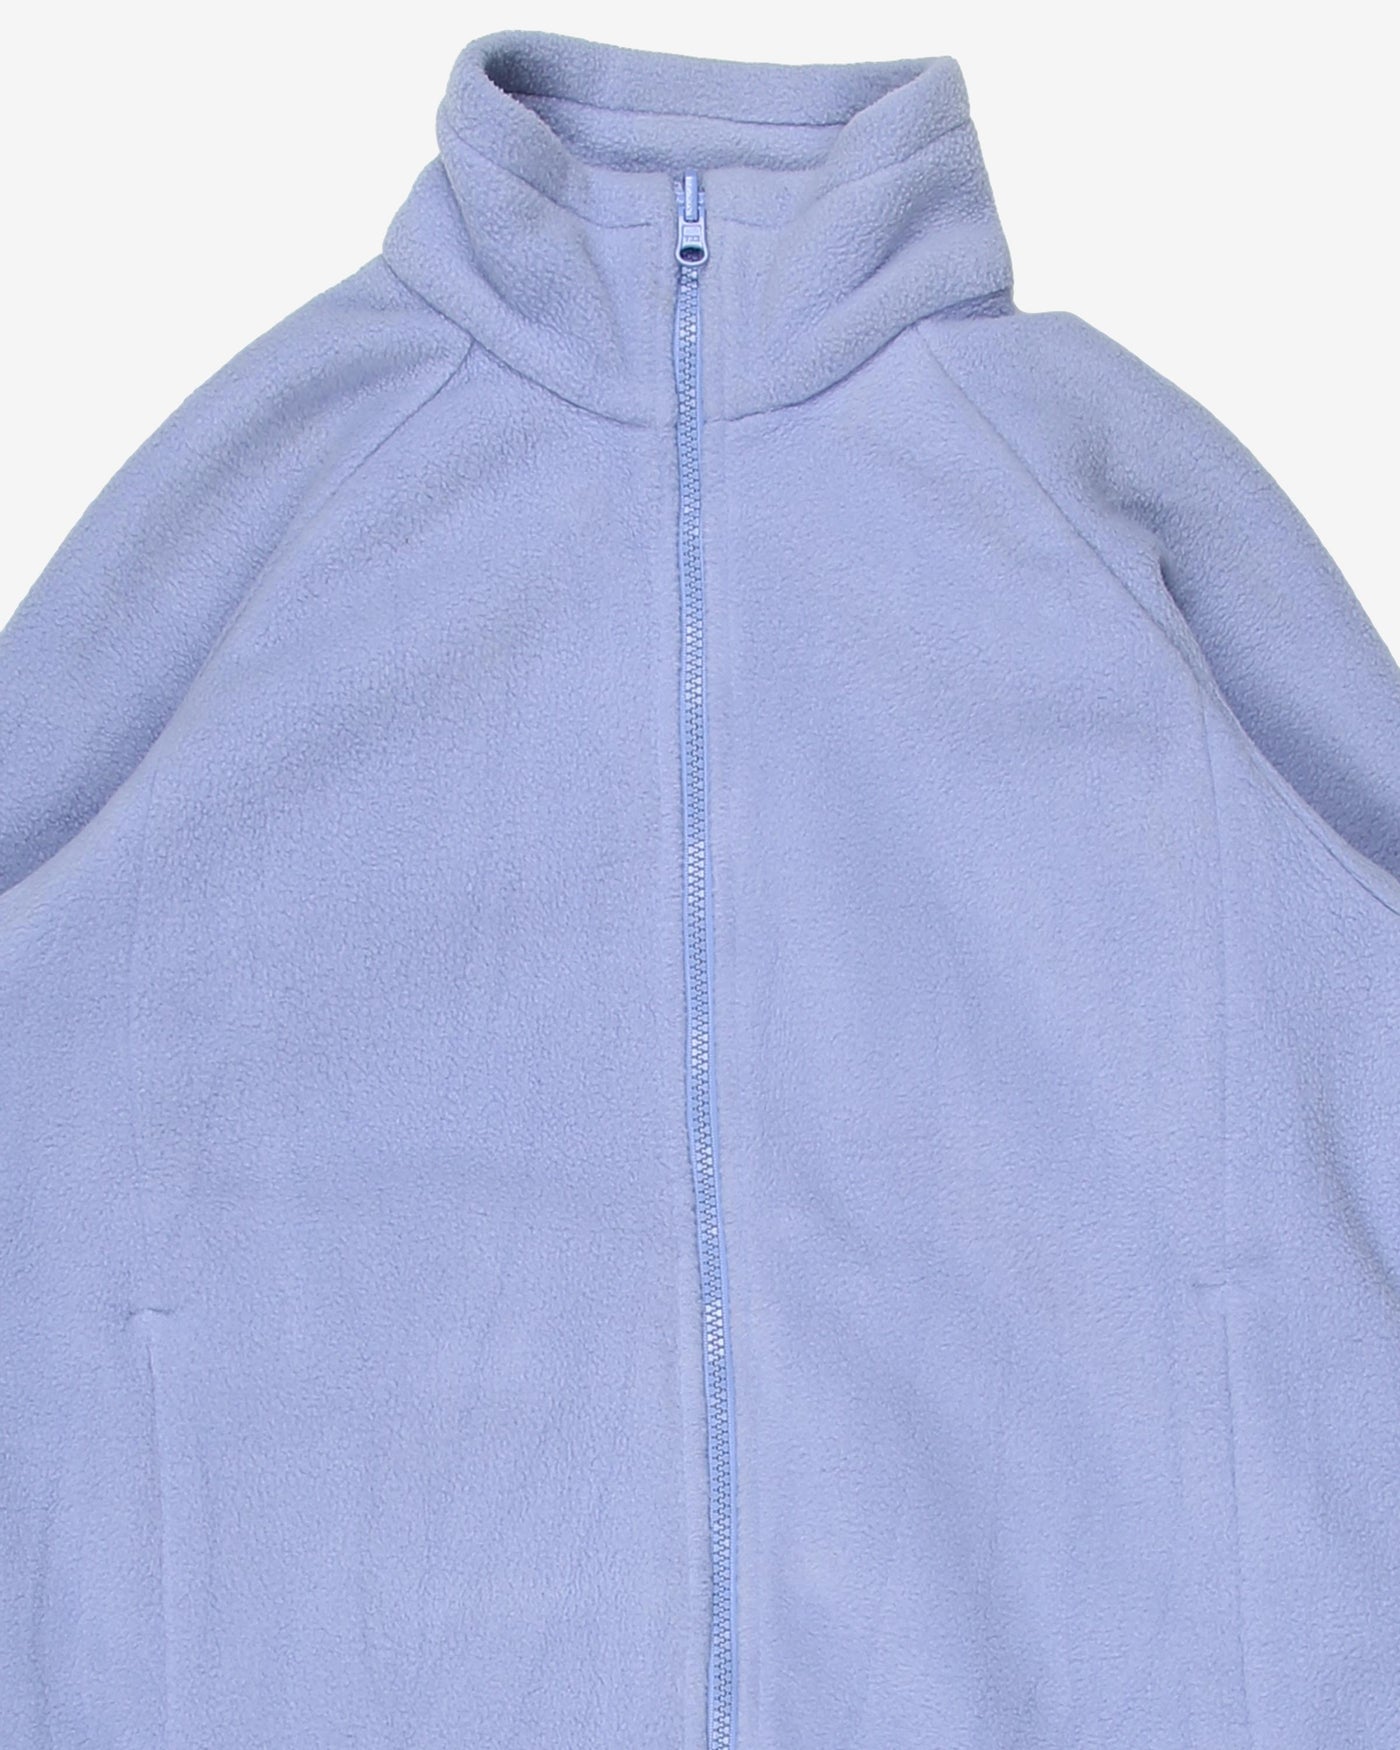 Columbia Sportswear Lilac Fleece - S